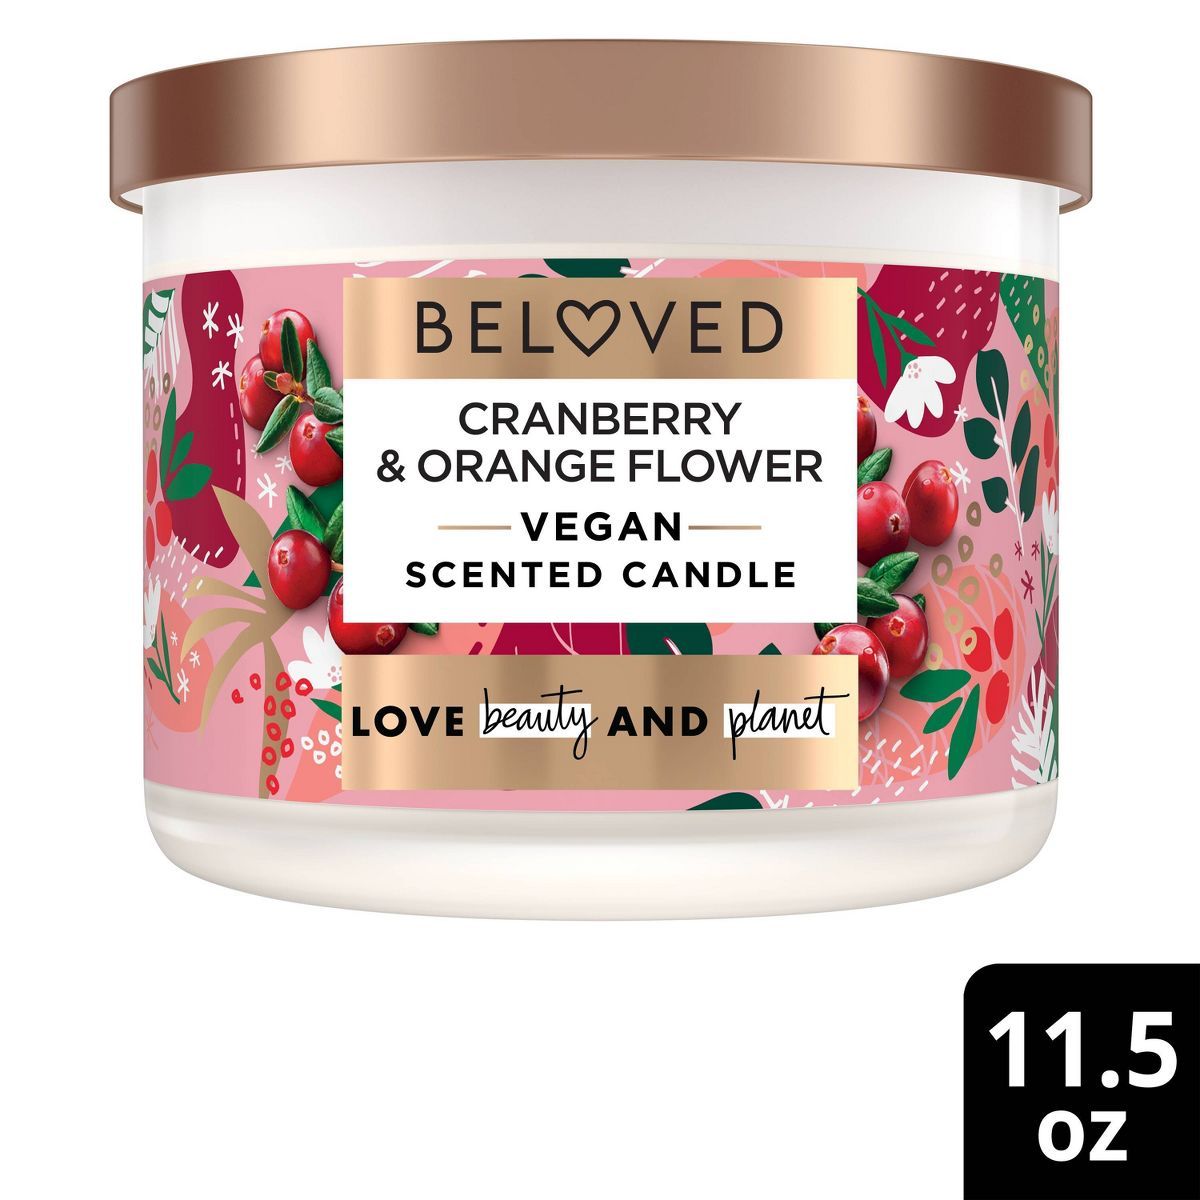 Beloved Cranberry and Orange Flower 2-Wick Candle - 11.5oz | Target